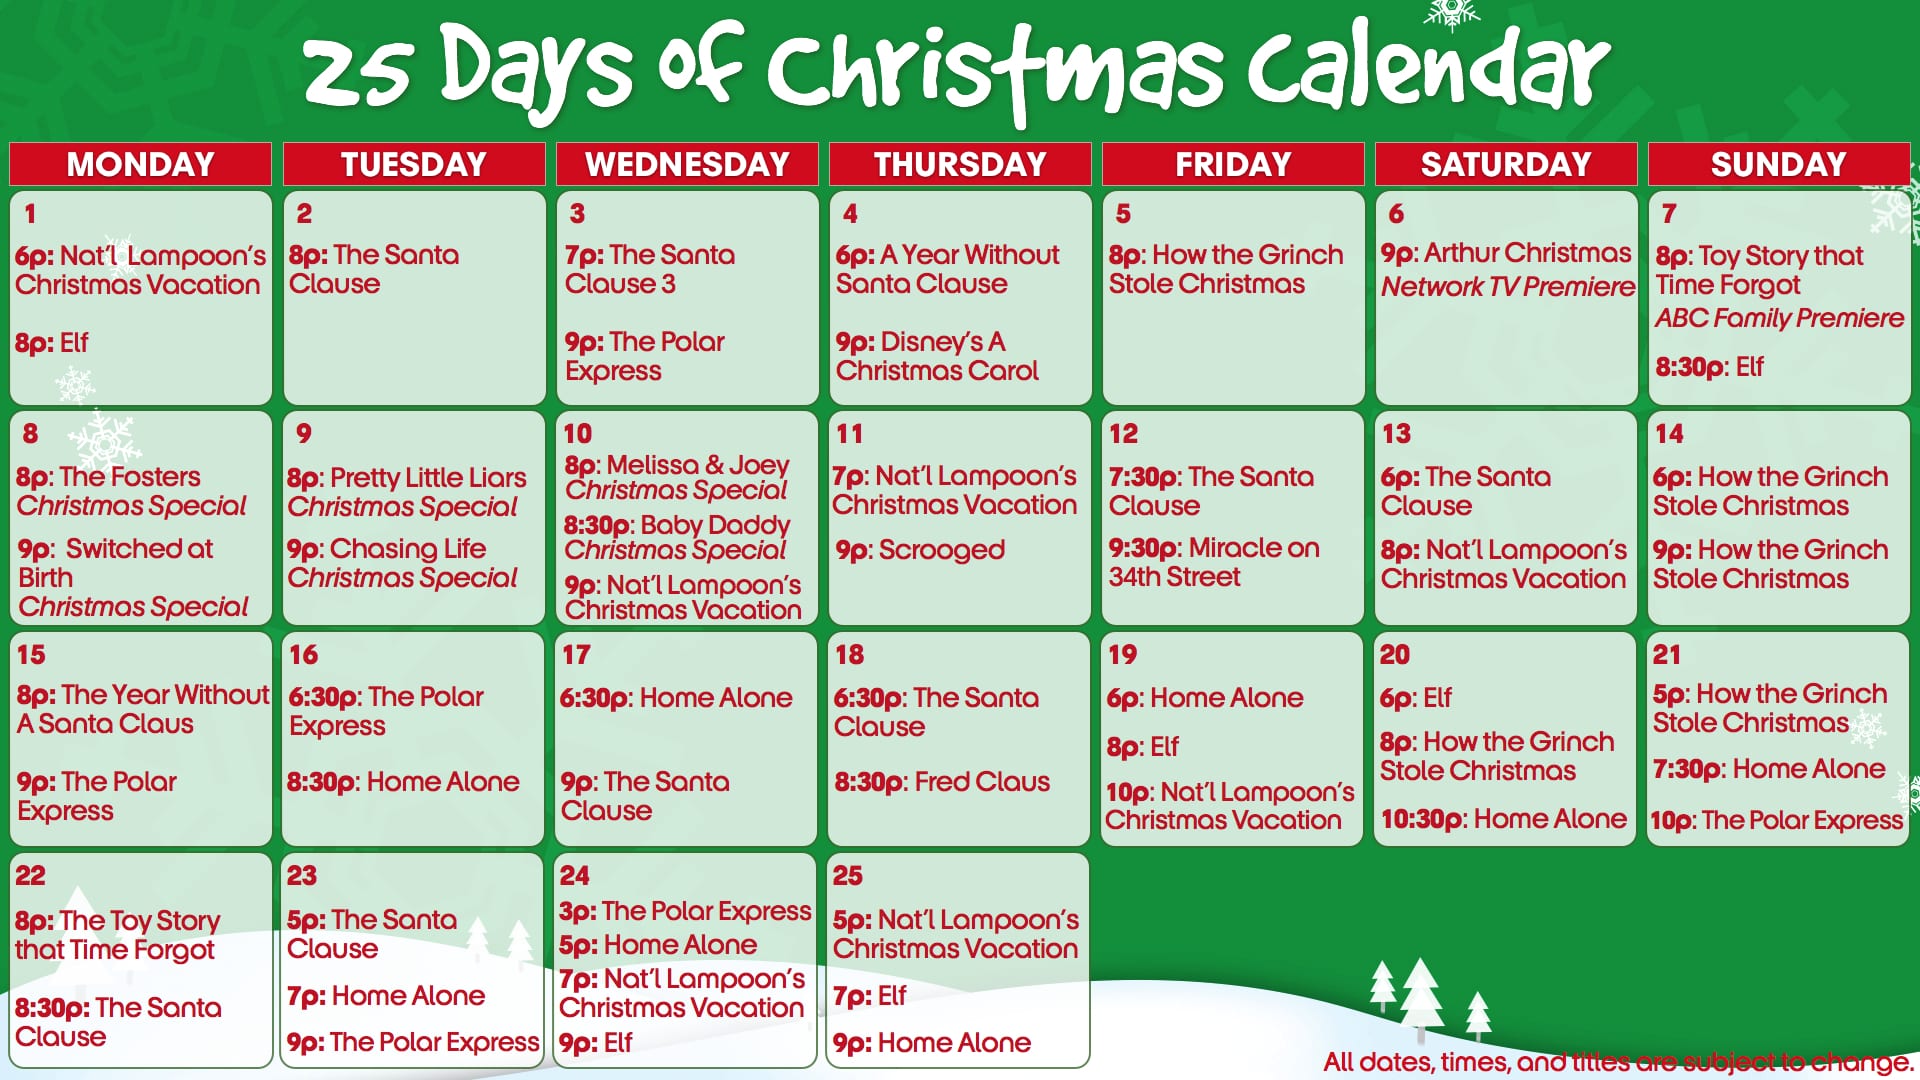 ABC Family's “25 Days Of Christmas” Starts Tomorrow!